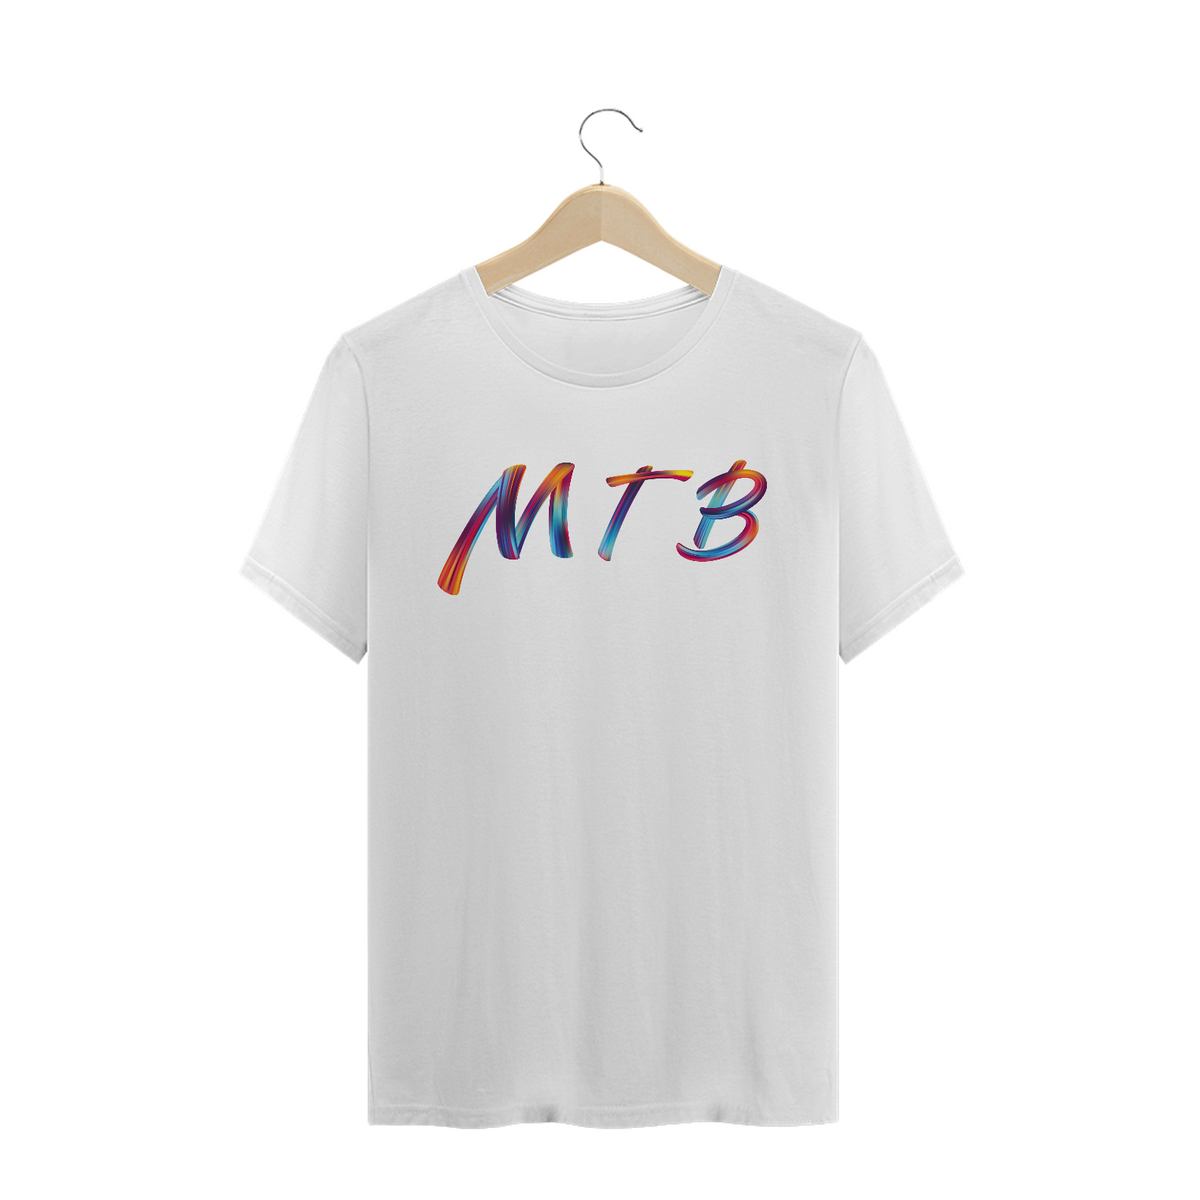 Nome do produto: Camiseta Prime Mtb Pincel